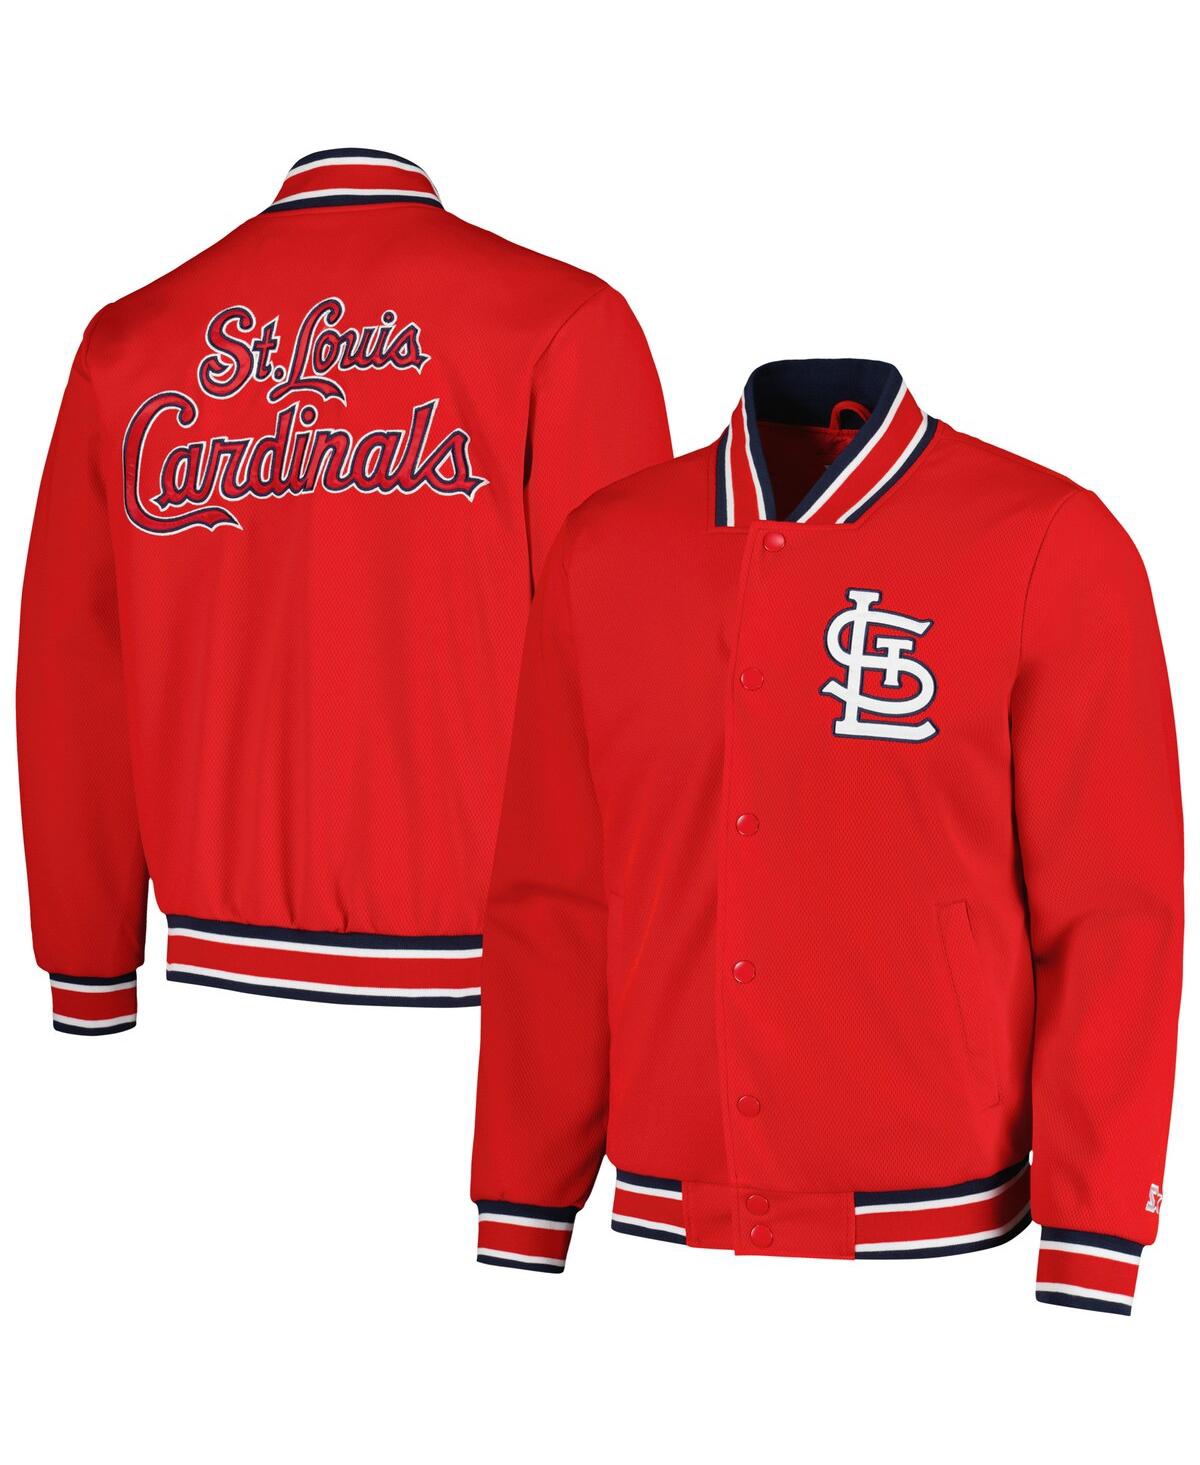 Men's Starter Red St. Louis Cardinals Secret Weapon Satin Full-Snap Jacket - Red